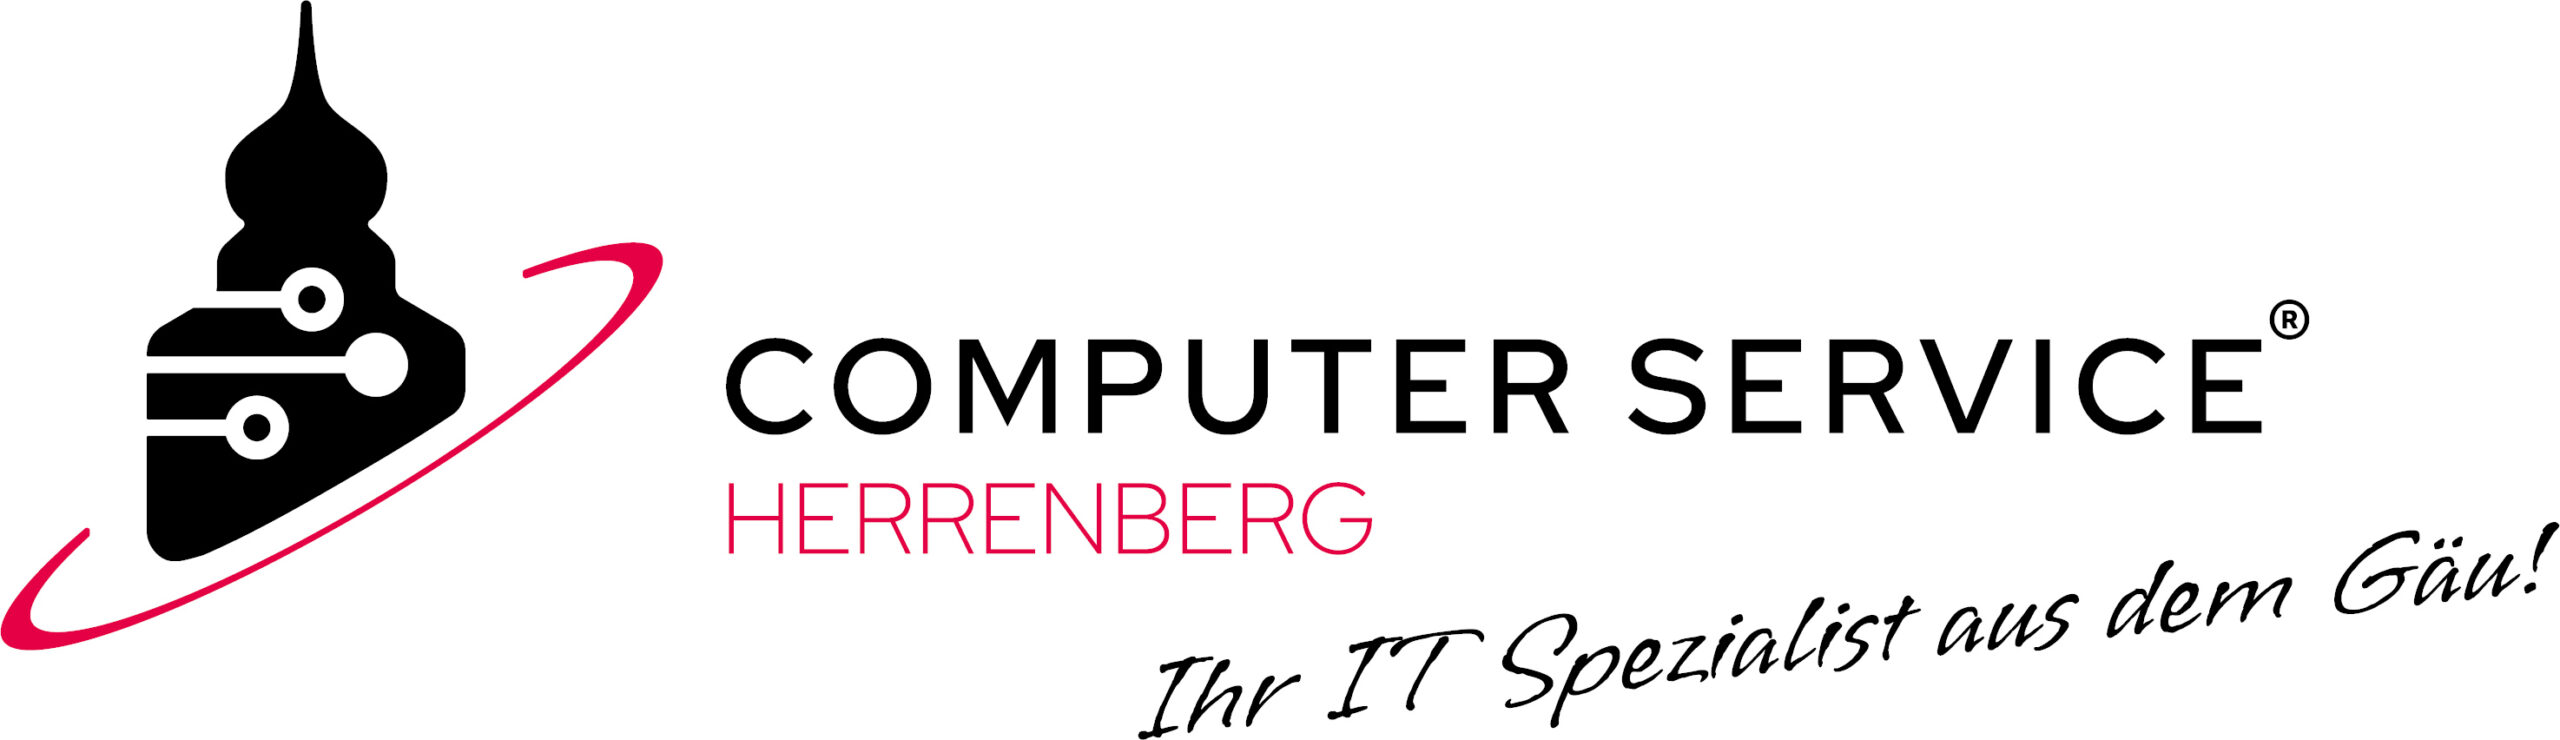 Computer Service Herrenberg